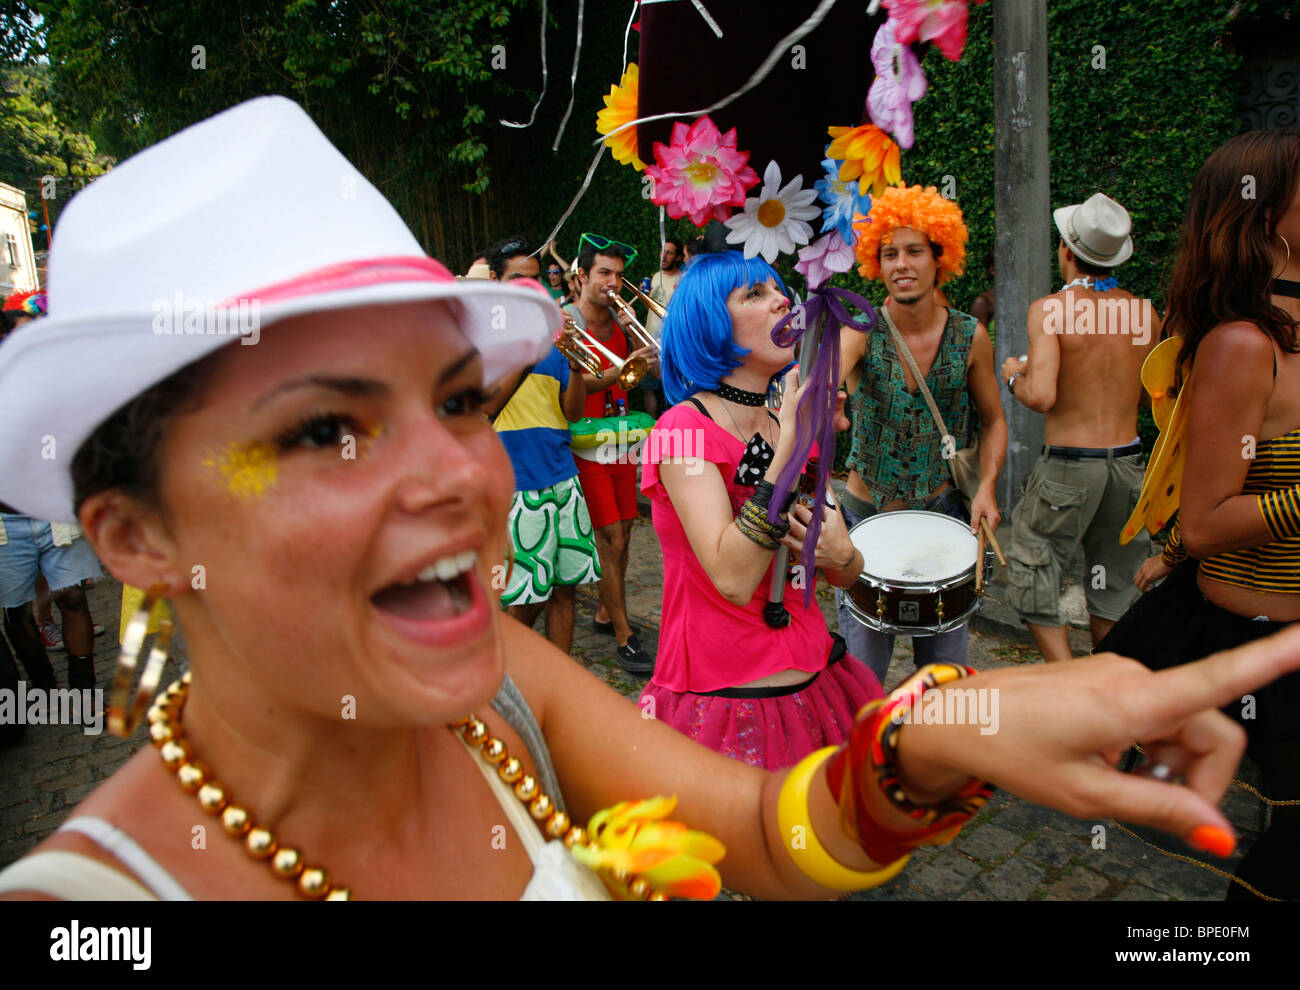 People celebrating Carnival at the streets of Santa Teresa, Rio de Janeiro, Brazil. Stock Photo